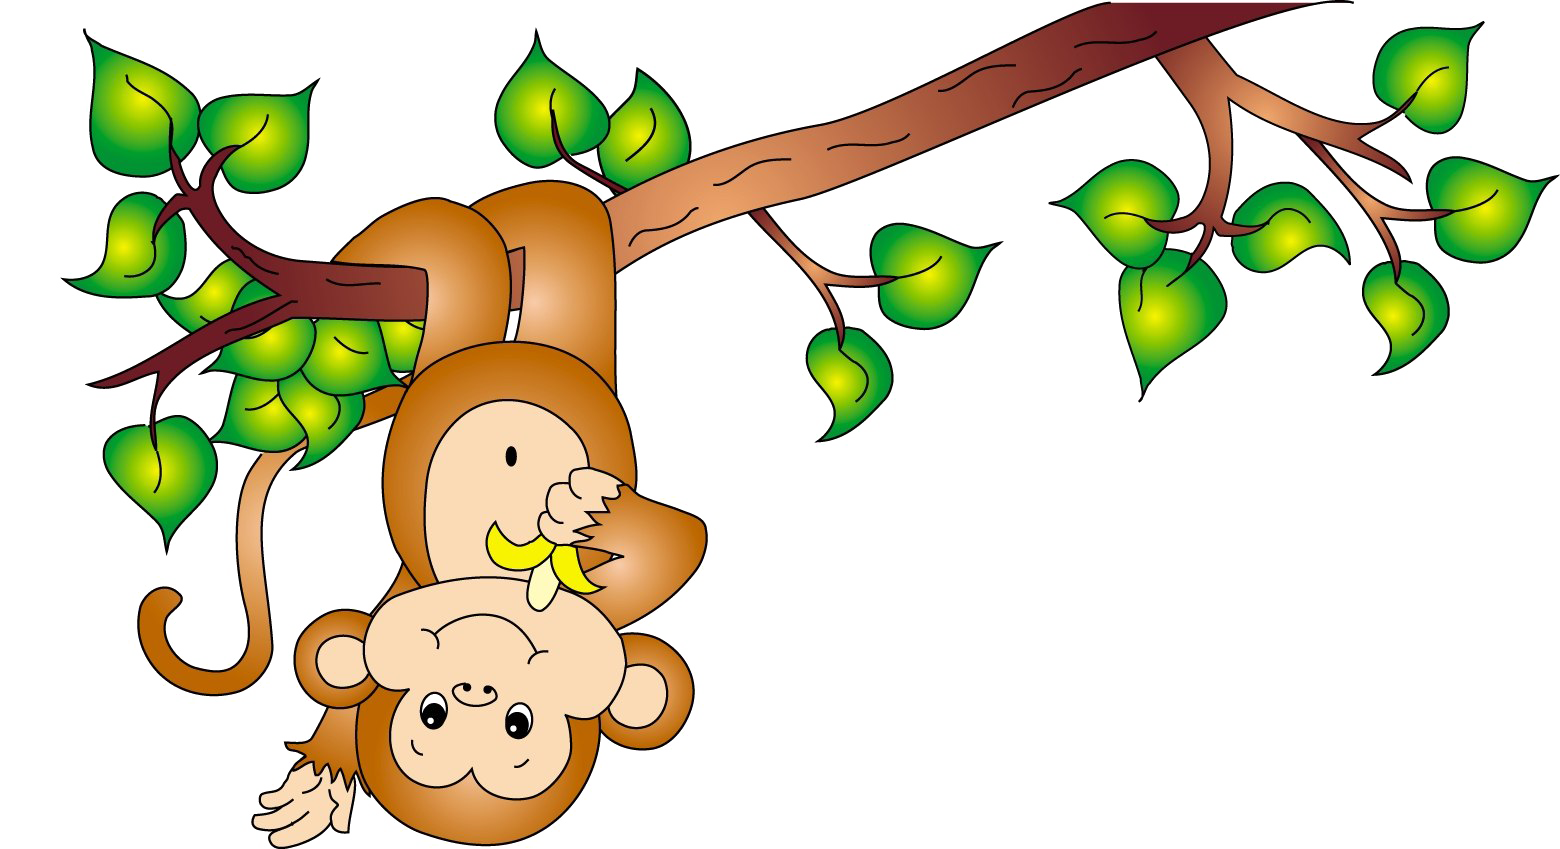 Cute Cartoon Monkey PNG Image Background.